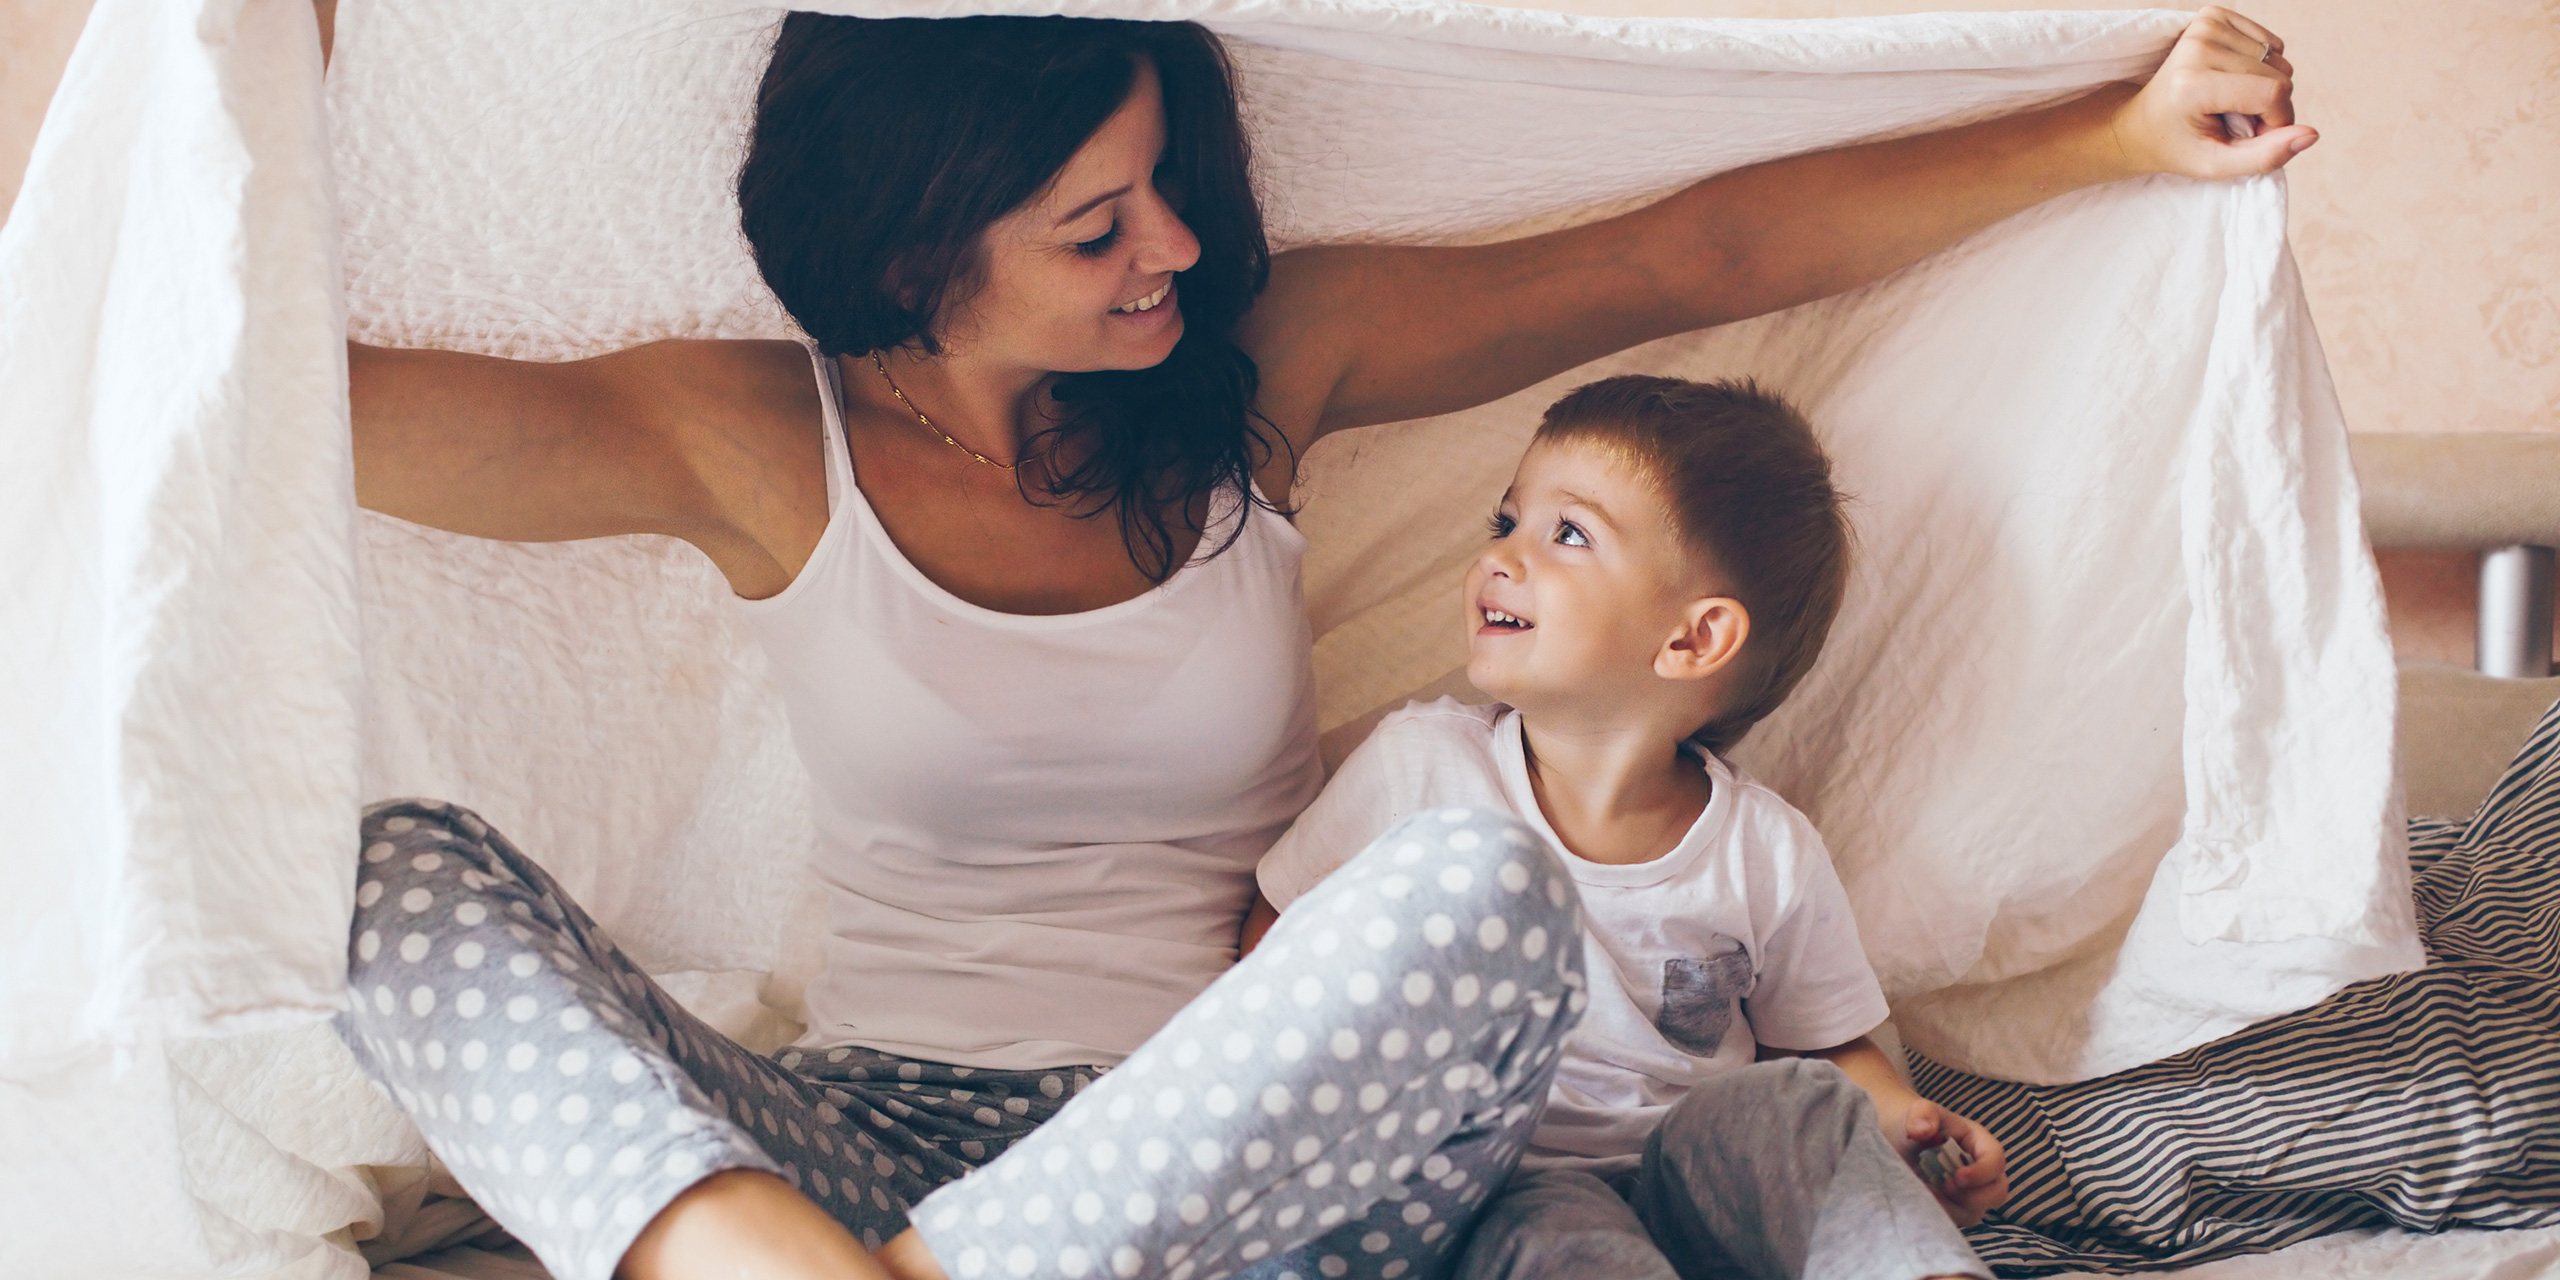 mom pajamas; Courtesy of Shutterstock